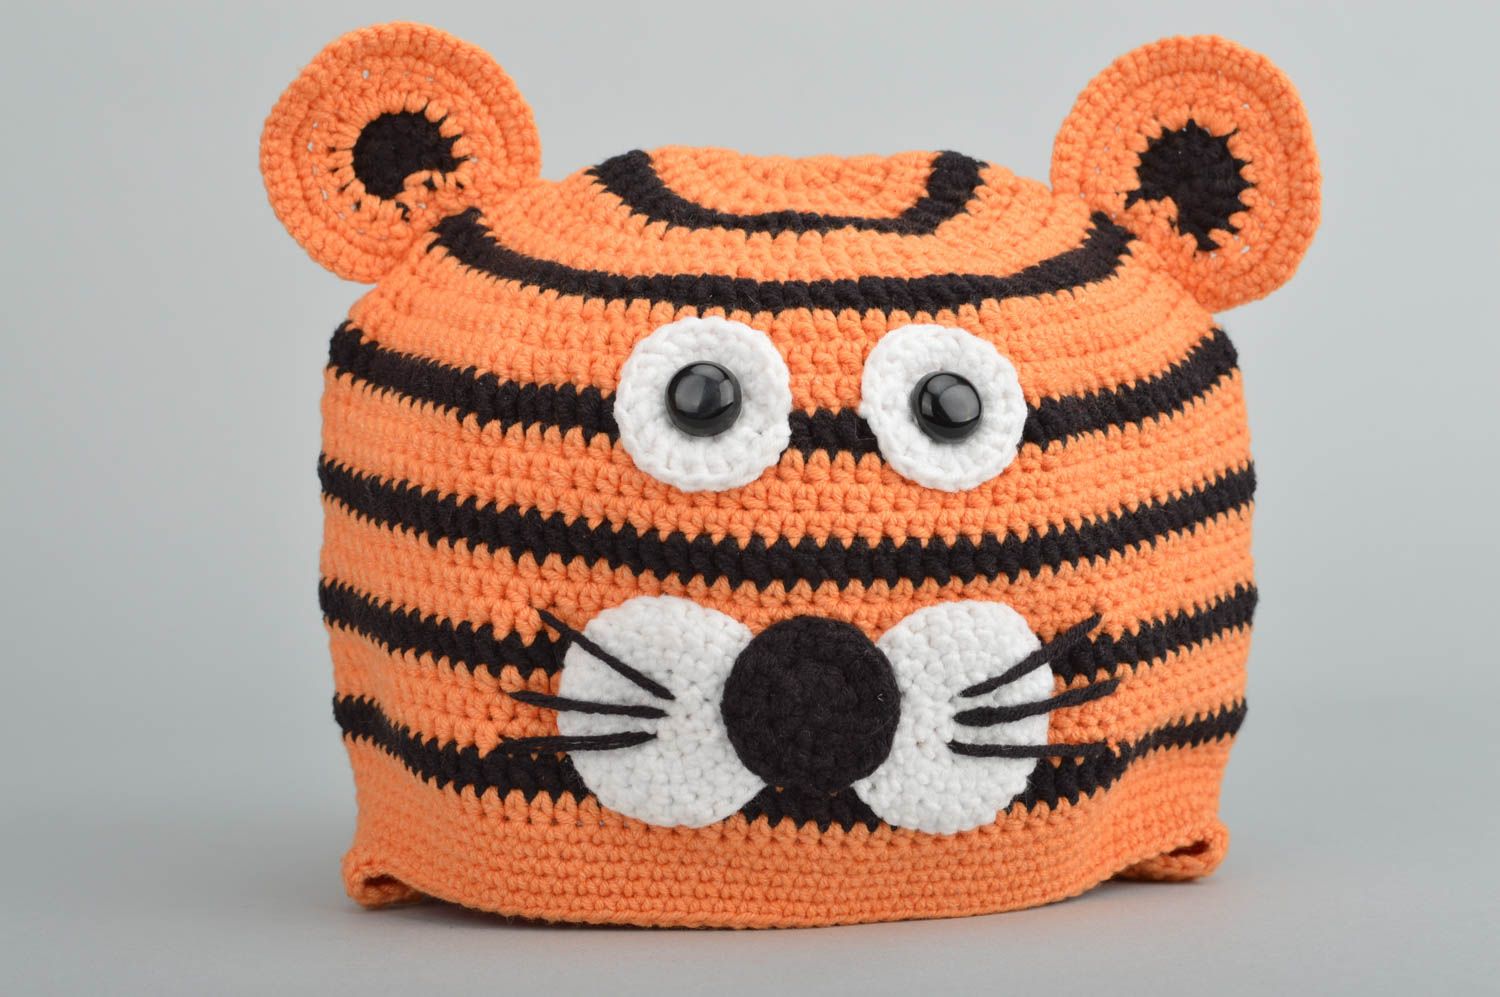 Handmade accessory crochet baby animal hat tiger hat gift ideas for children photo 2